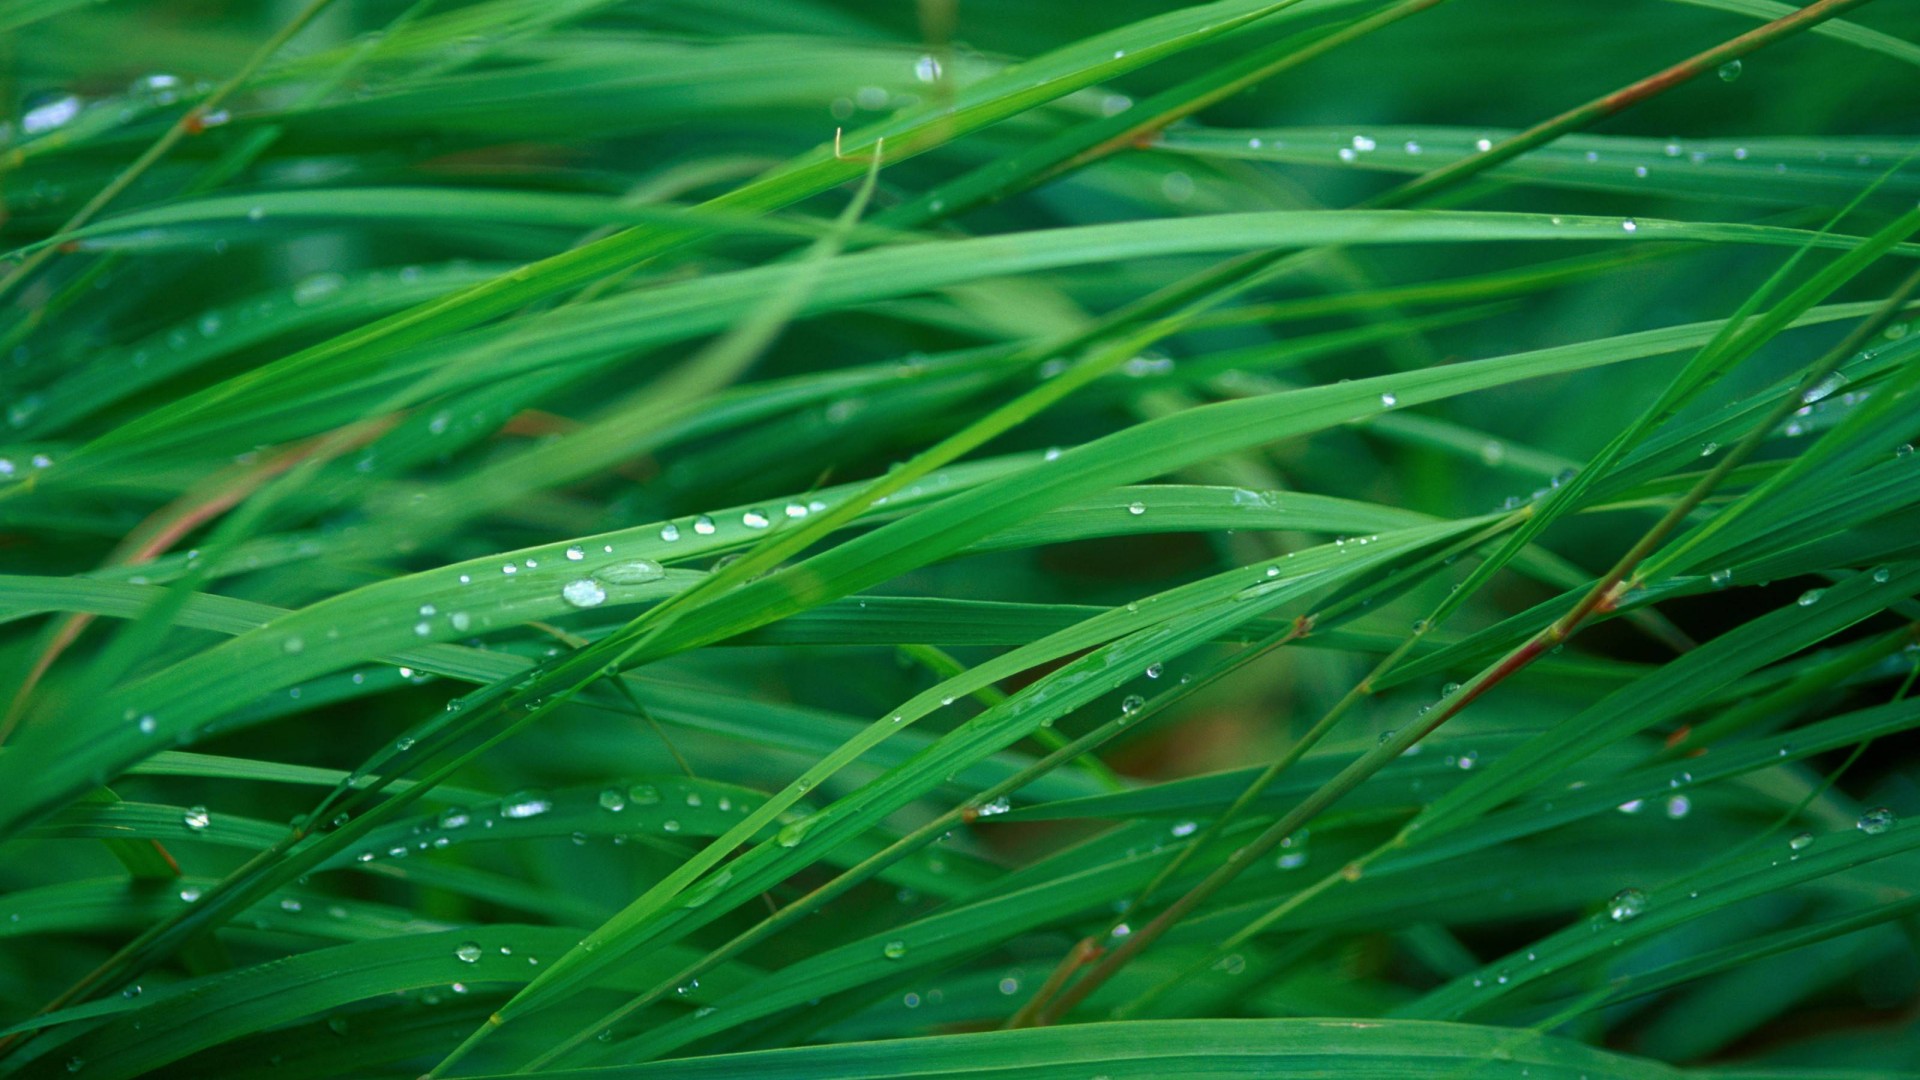 трава, 5k, 4k, макро, OSX, grass, 5k, 4k wallpaper, OSX, green, dew (horizontal)